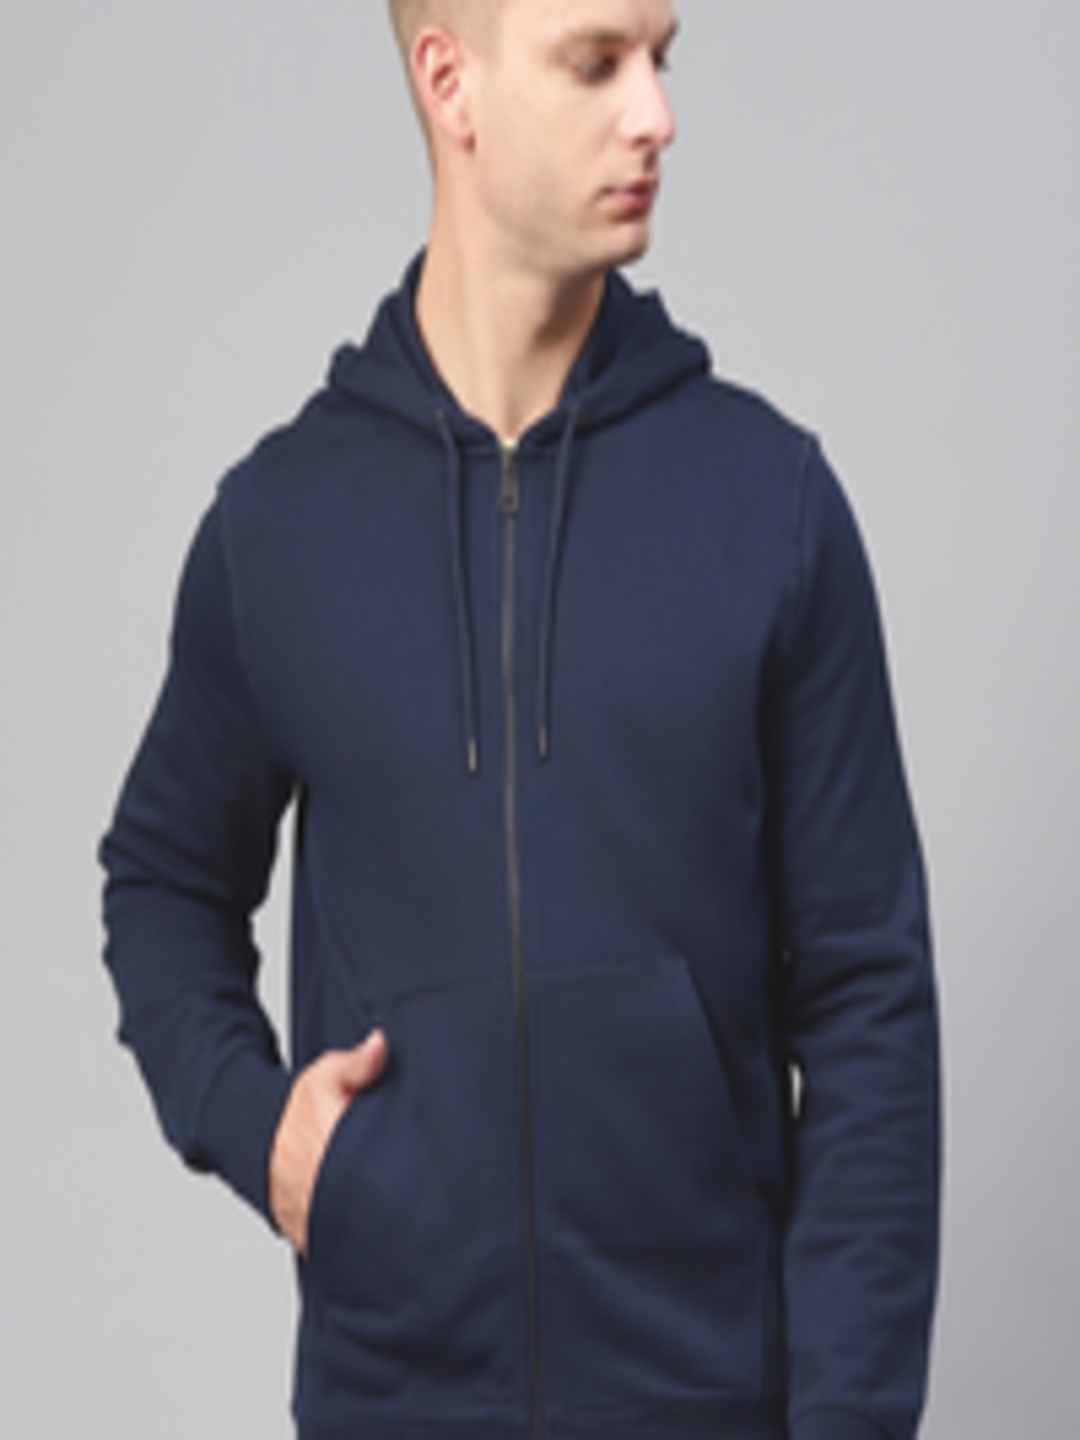 Buy Marks & Spencer Men Navy Blue Solid Hooded Sweatshirt - Sweatshirts ...